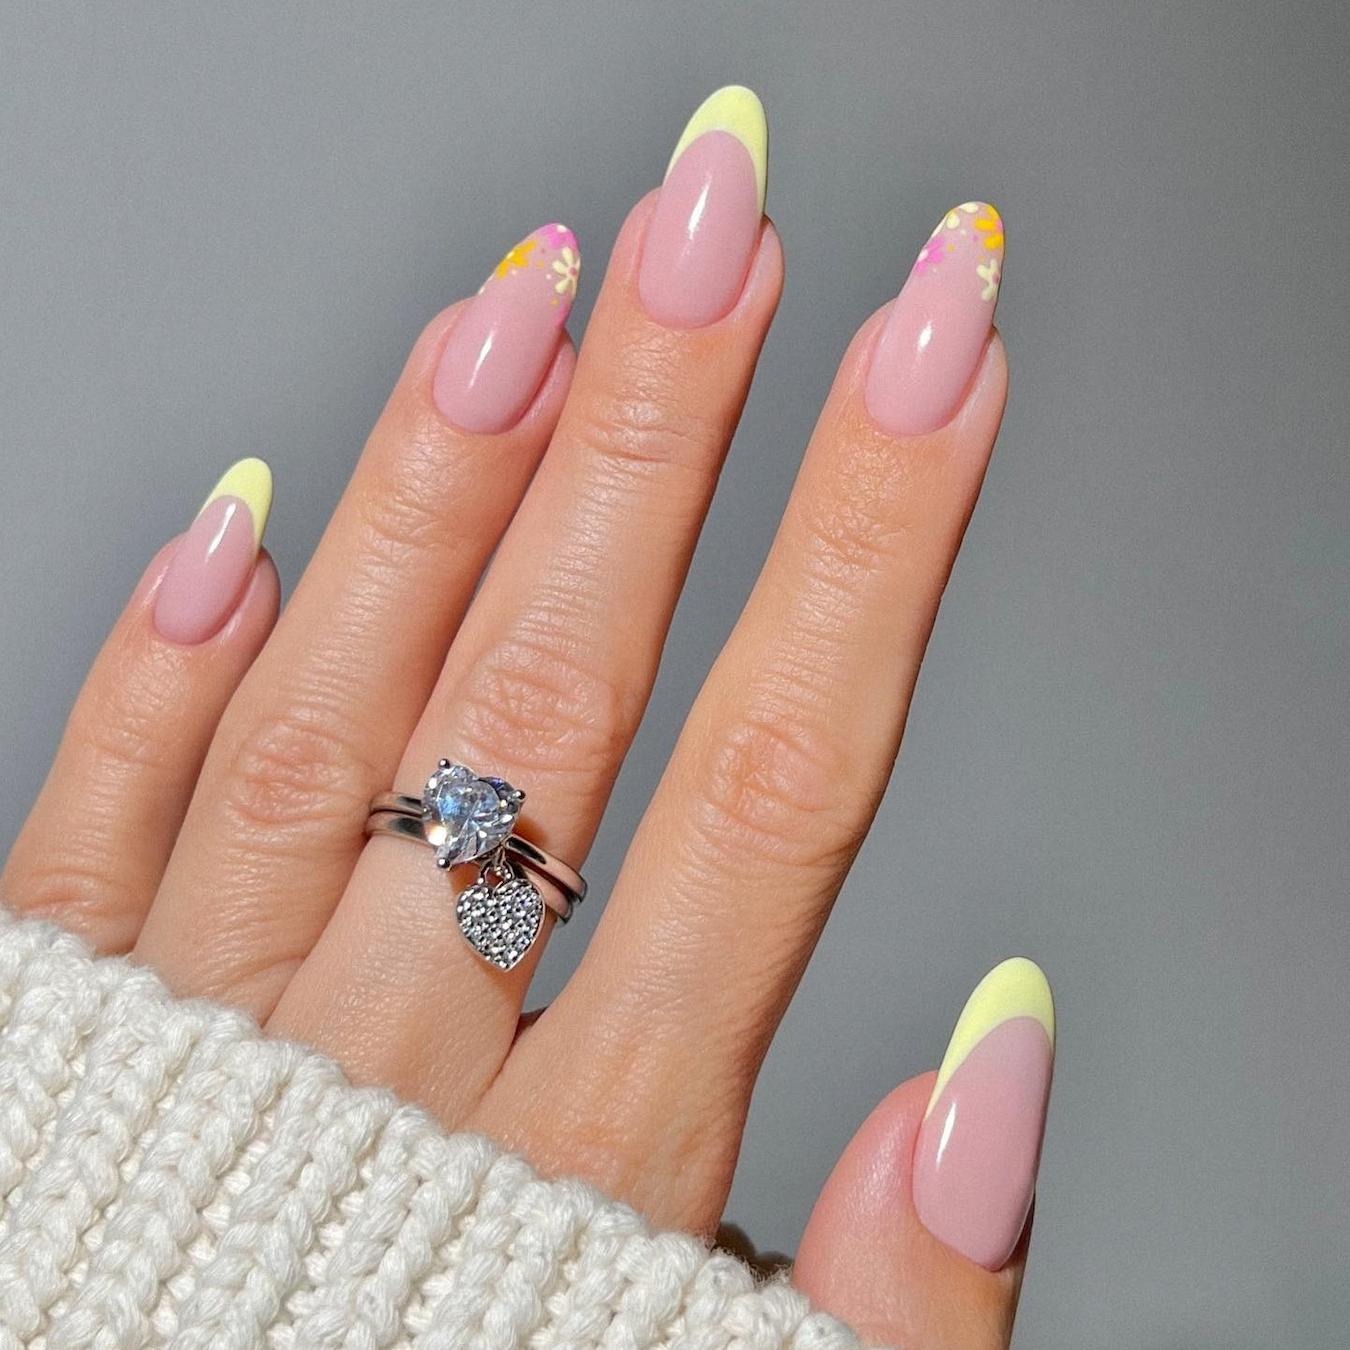 Glitter Nails - 40 of the Sparkliest Designs on Instagram